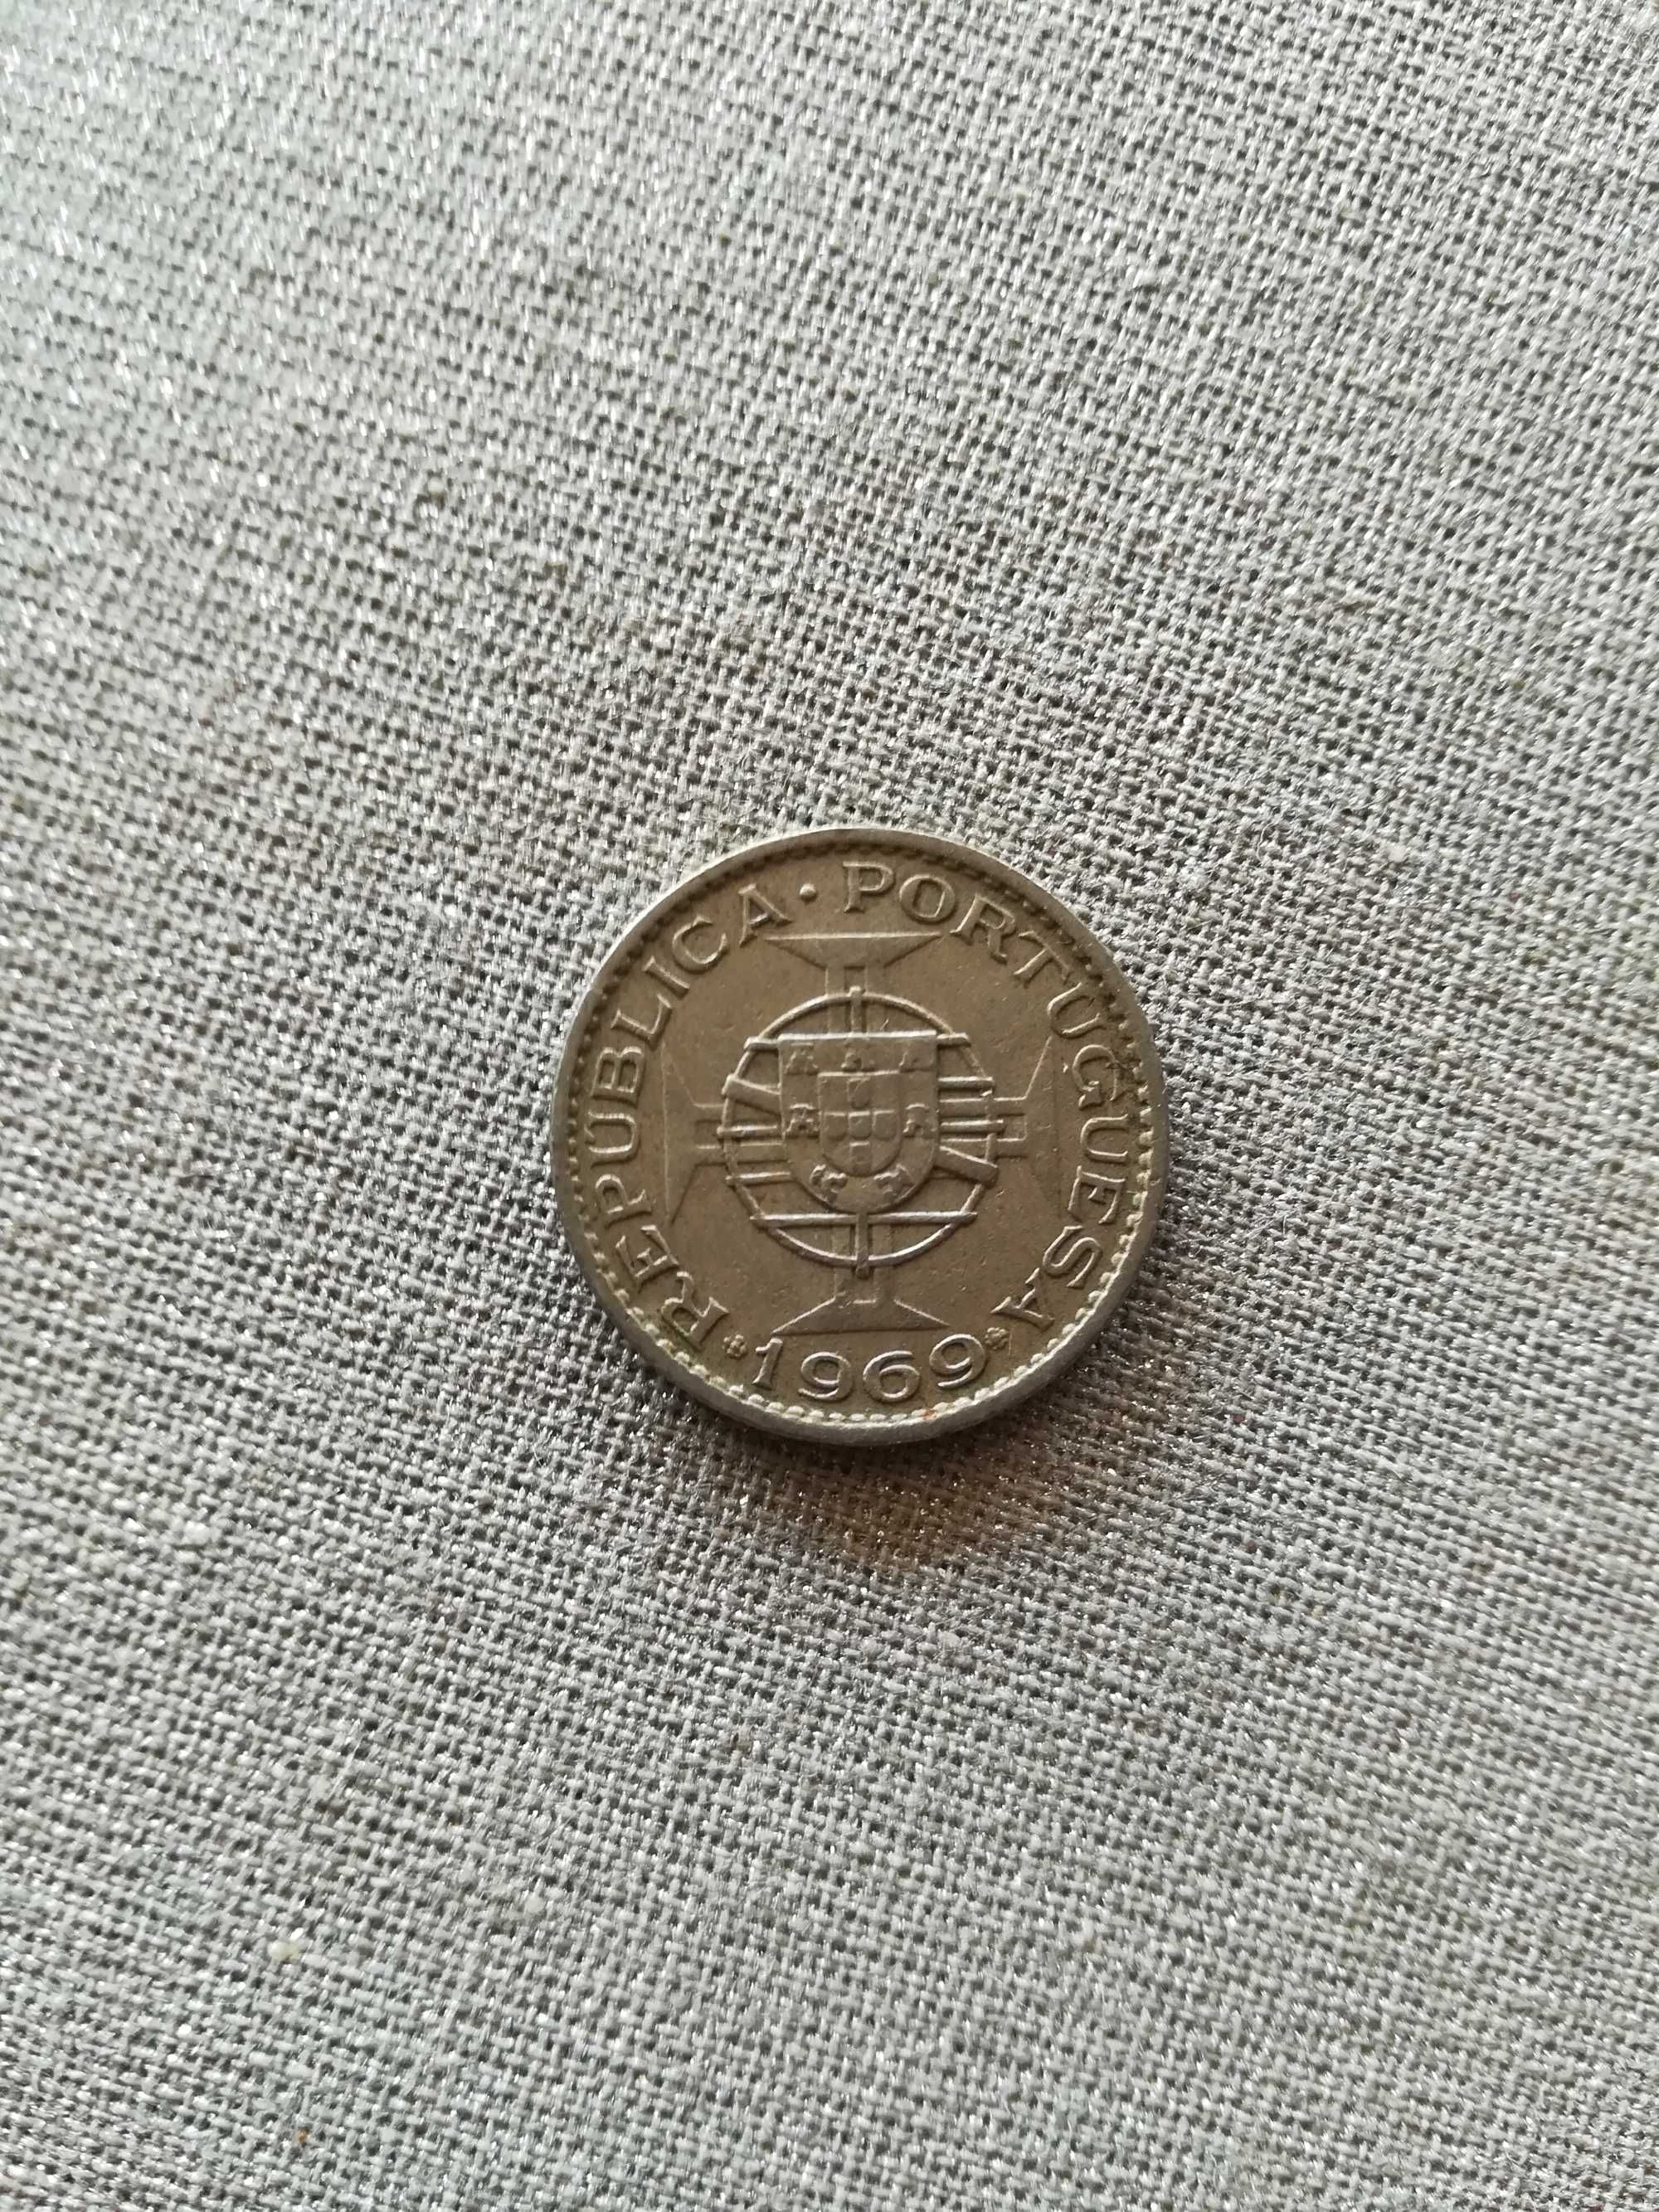 Moeda 2$50 1969 Portugal